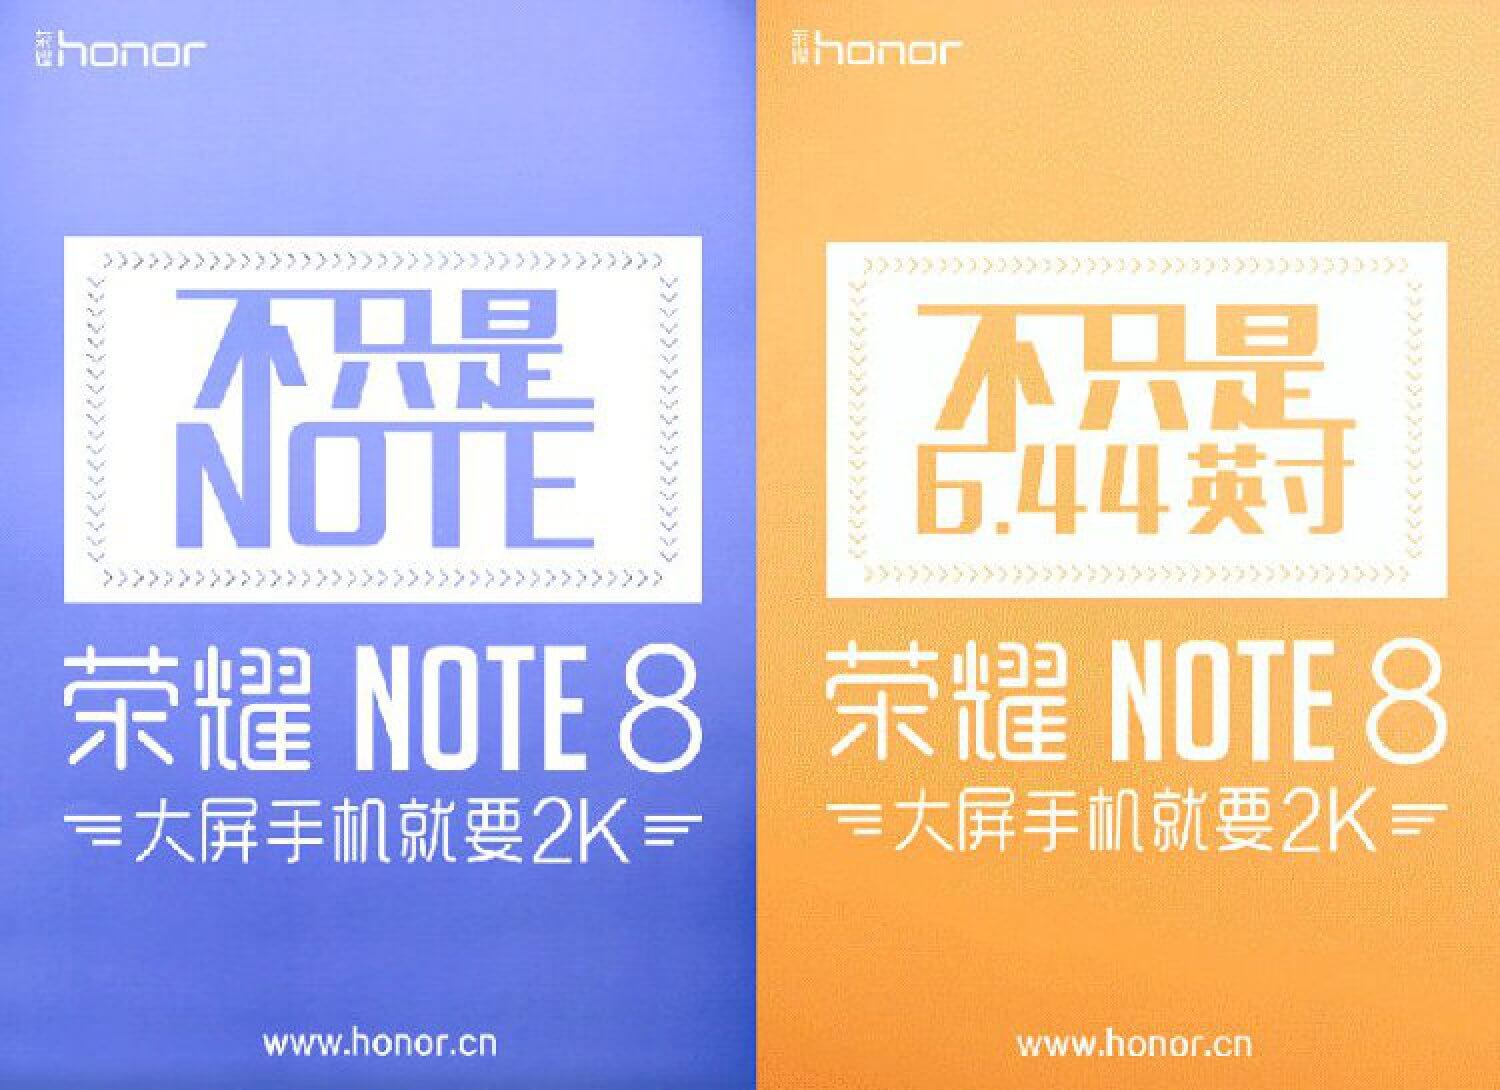 Тизер Huawei honor Note 8